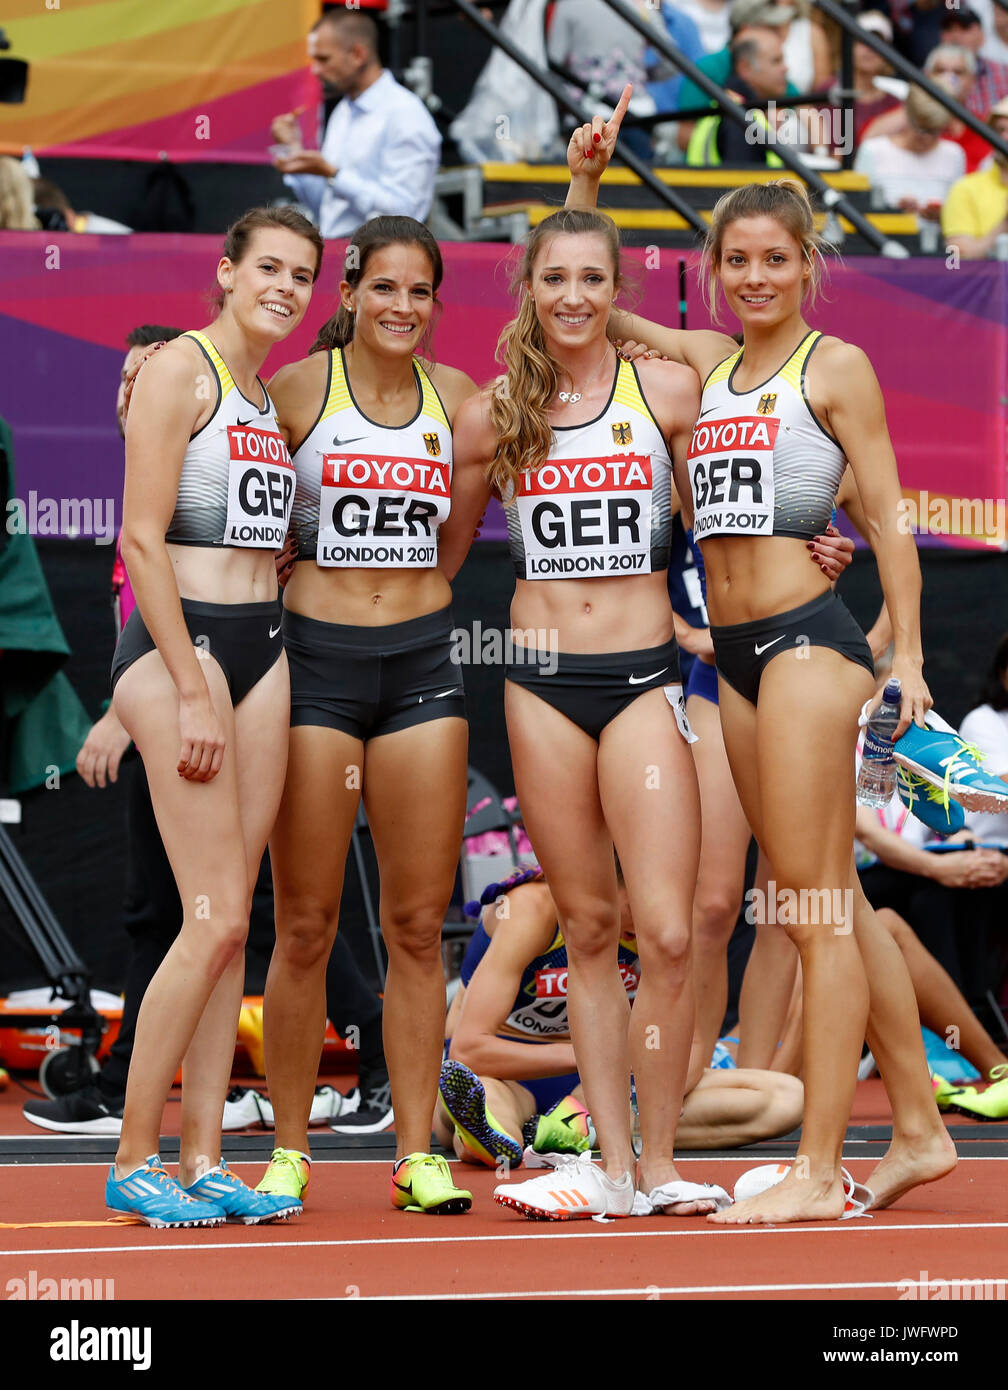 the-german-womens-4x400m-relay-team-ruth-sophia-spelmeyer-nadine-gonska-JWFWPD.jpg